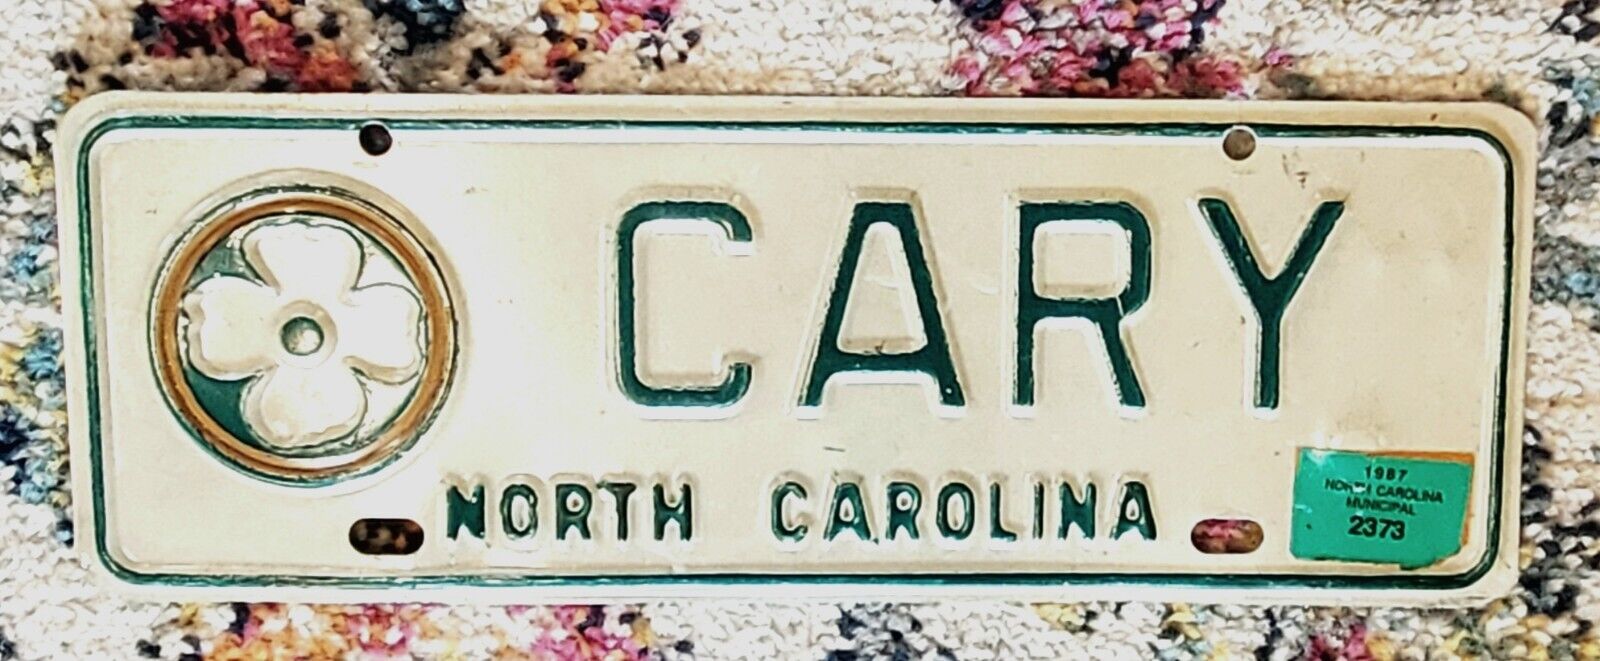 1987 North Carolina Vintage City of Cary - 2373 - Hard To Find Rare Tag ...